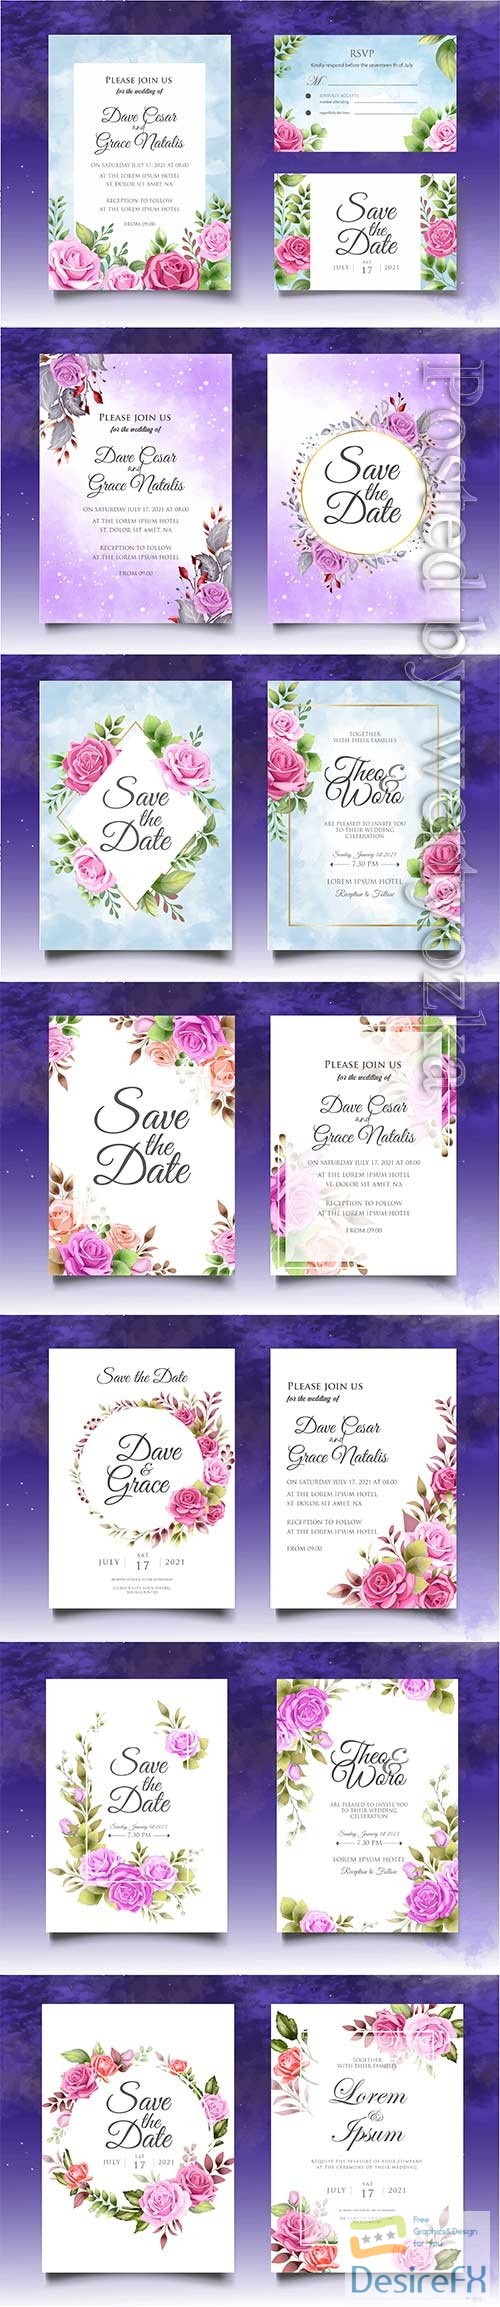 Luxury floral wedding invitation vector template